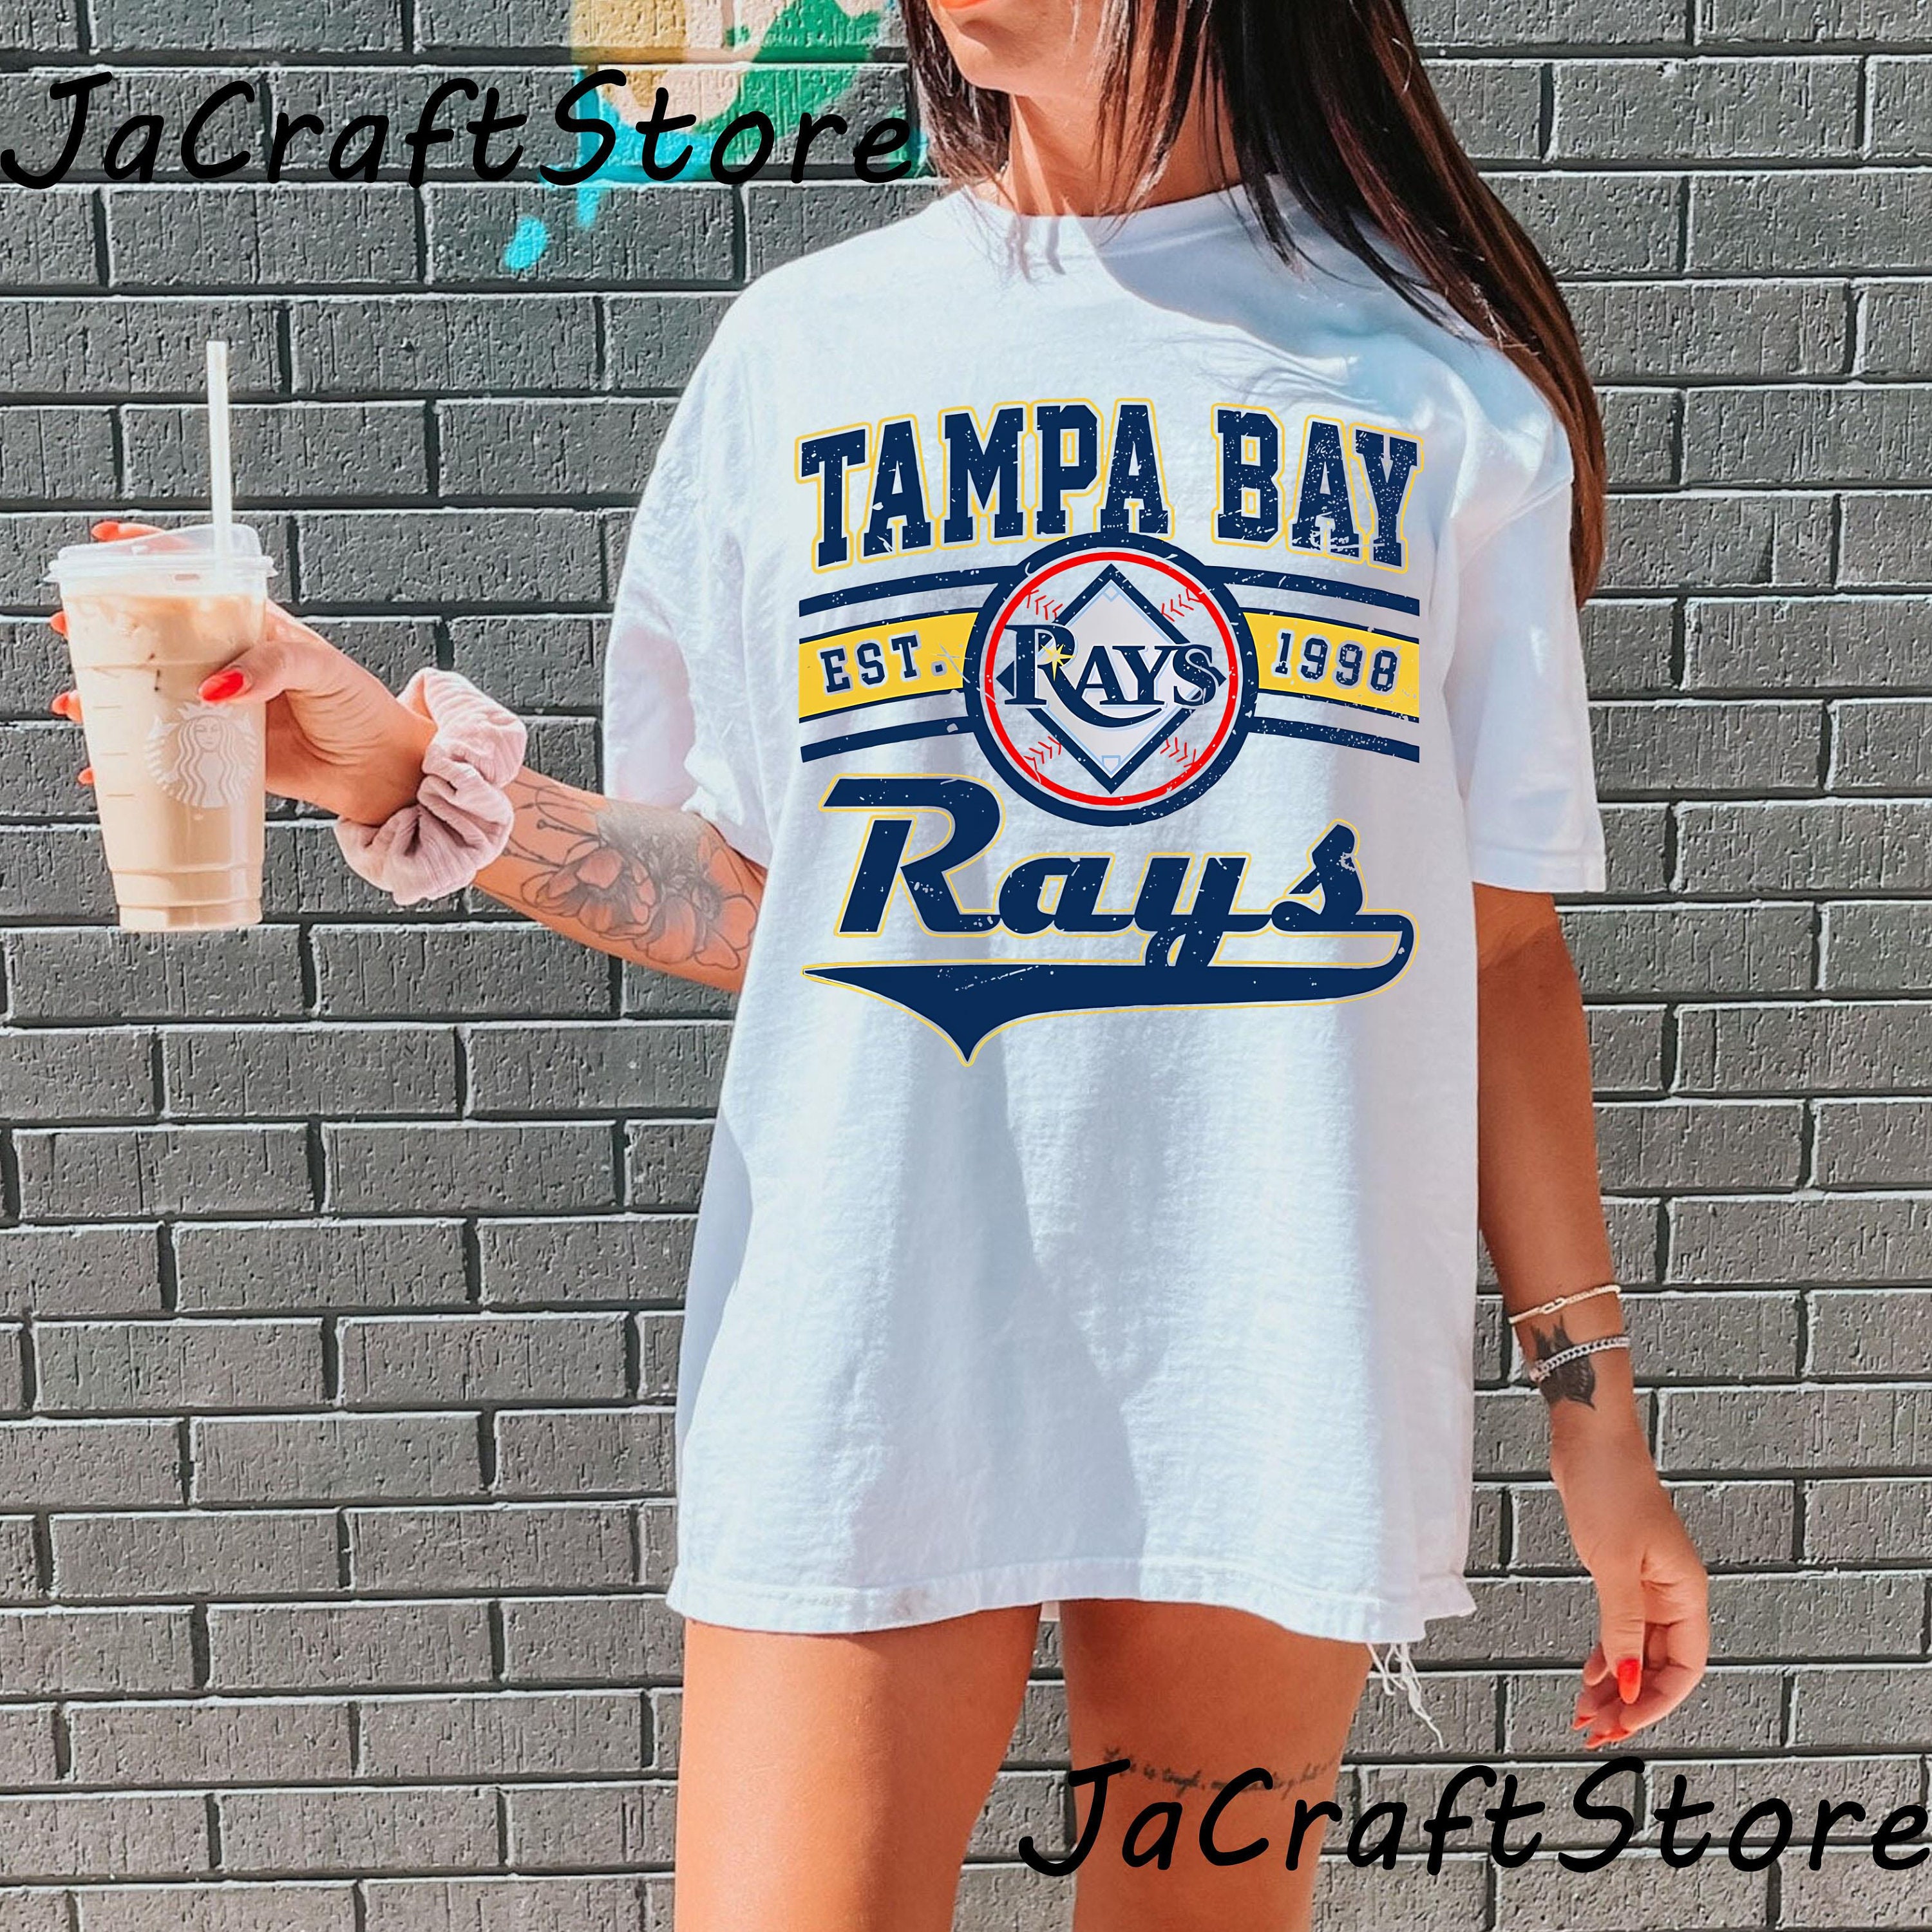 Tampa Bay Rays Genuine Merchandise Screen Print MLB Jersey David Price # 14  XL